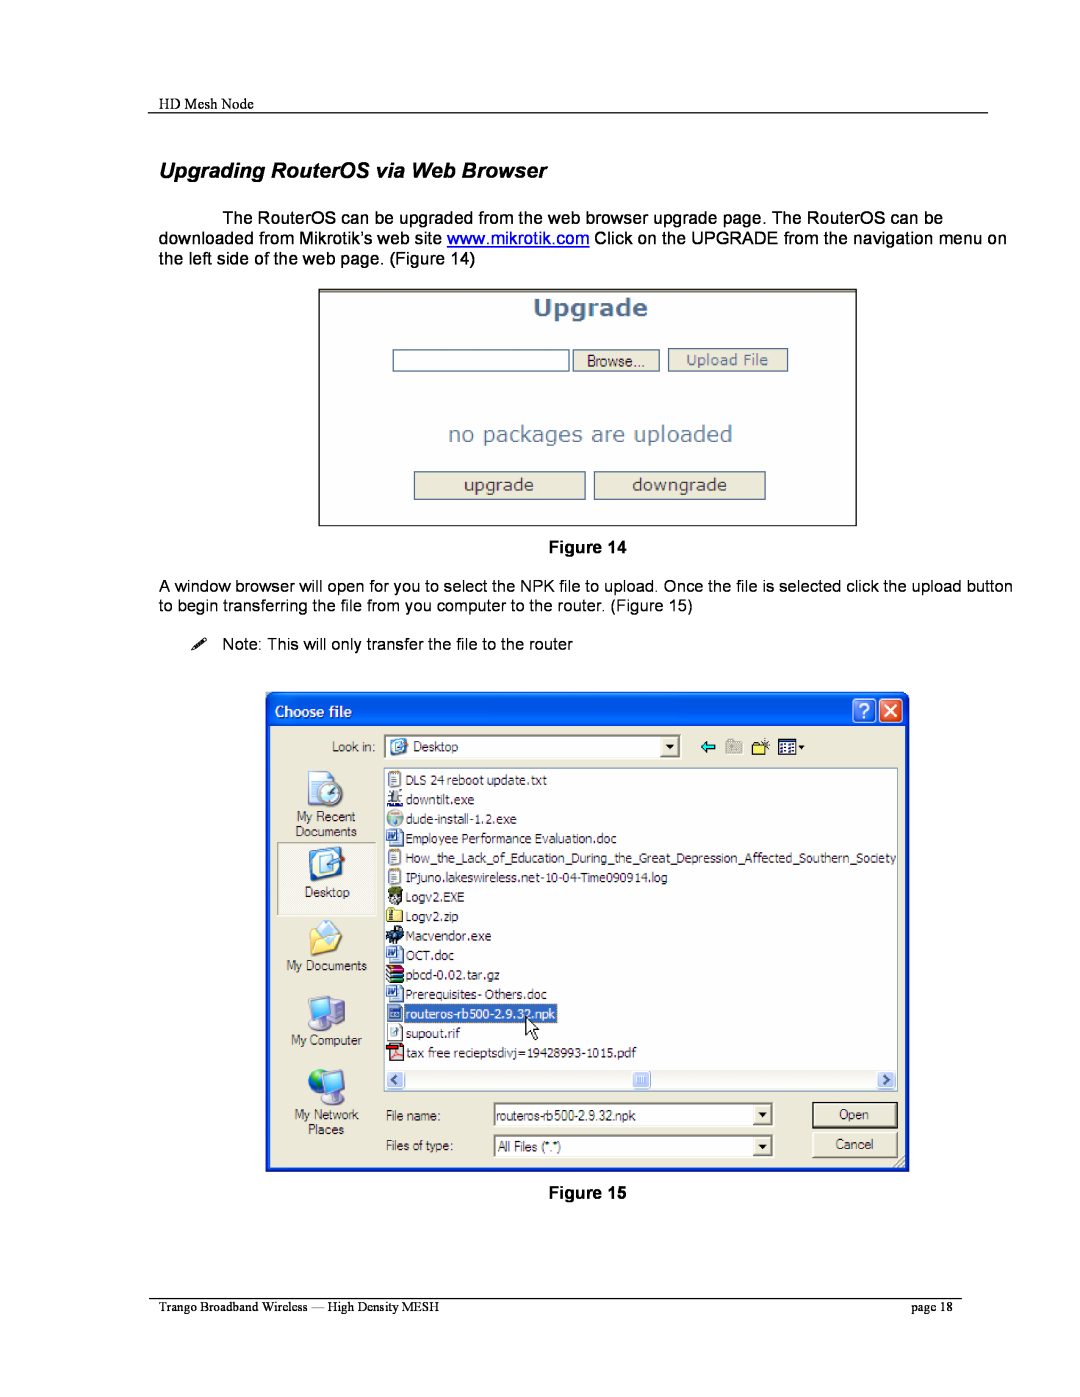 Trango Broadband High Density Mesh System user manual Upgrading RouterOS via Web Browser 